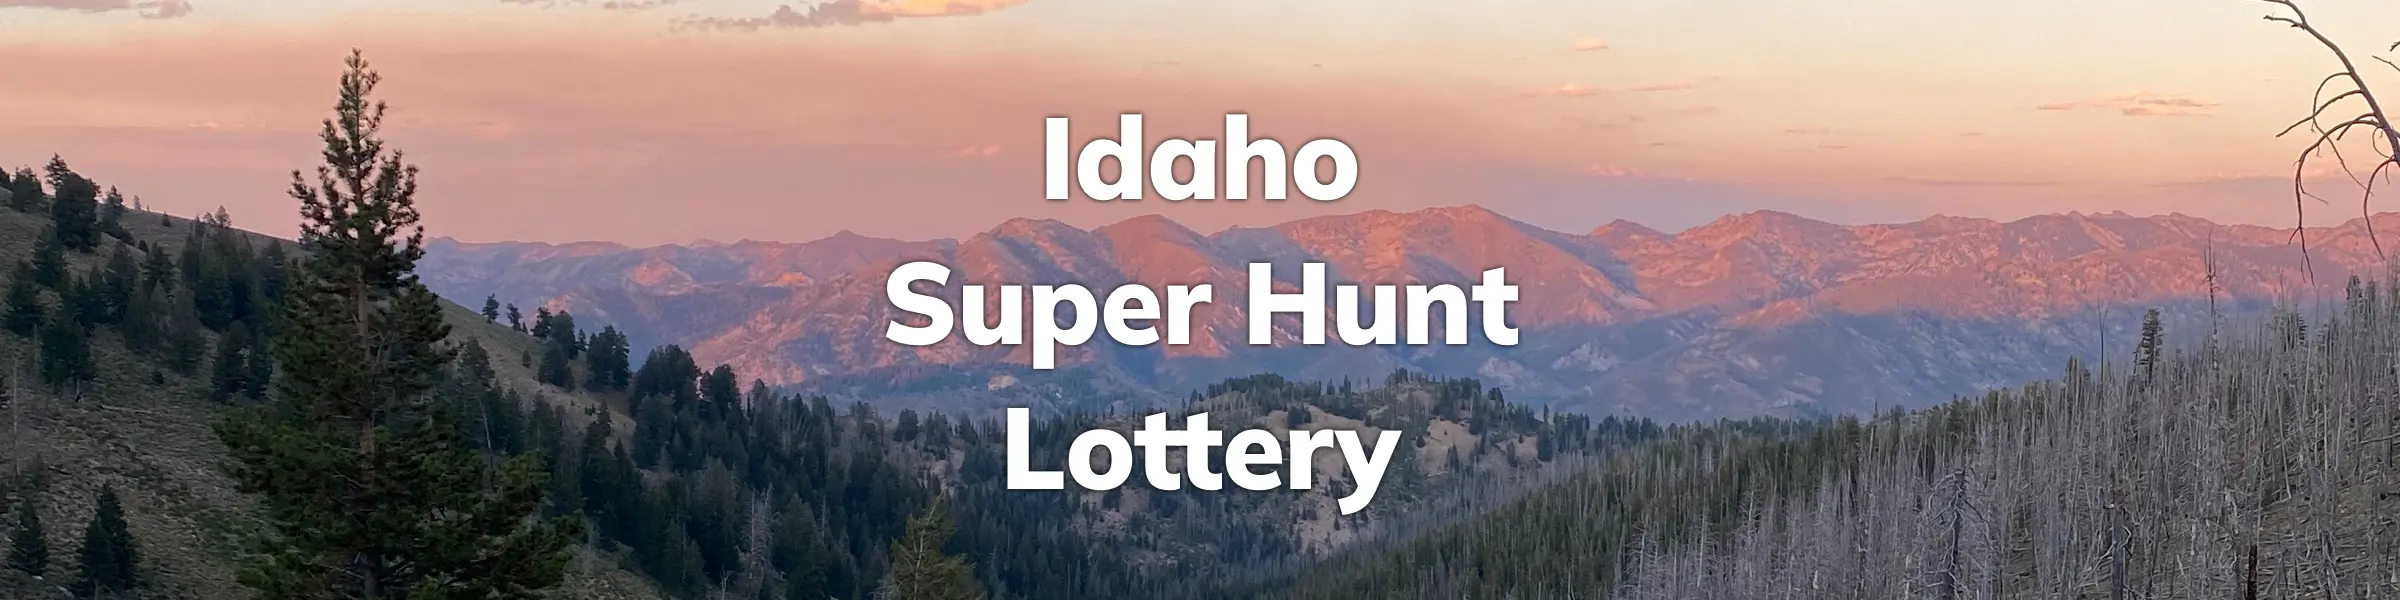 Idaho Super Hunt